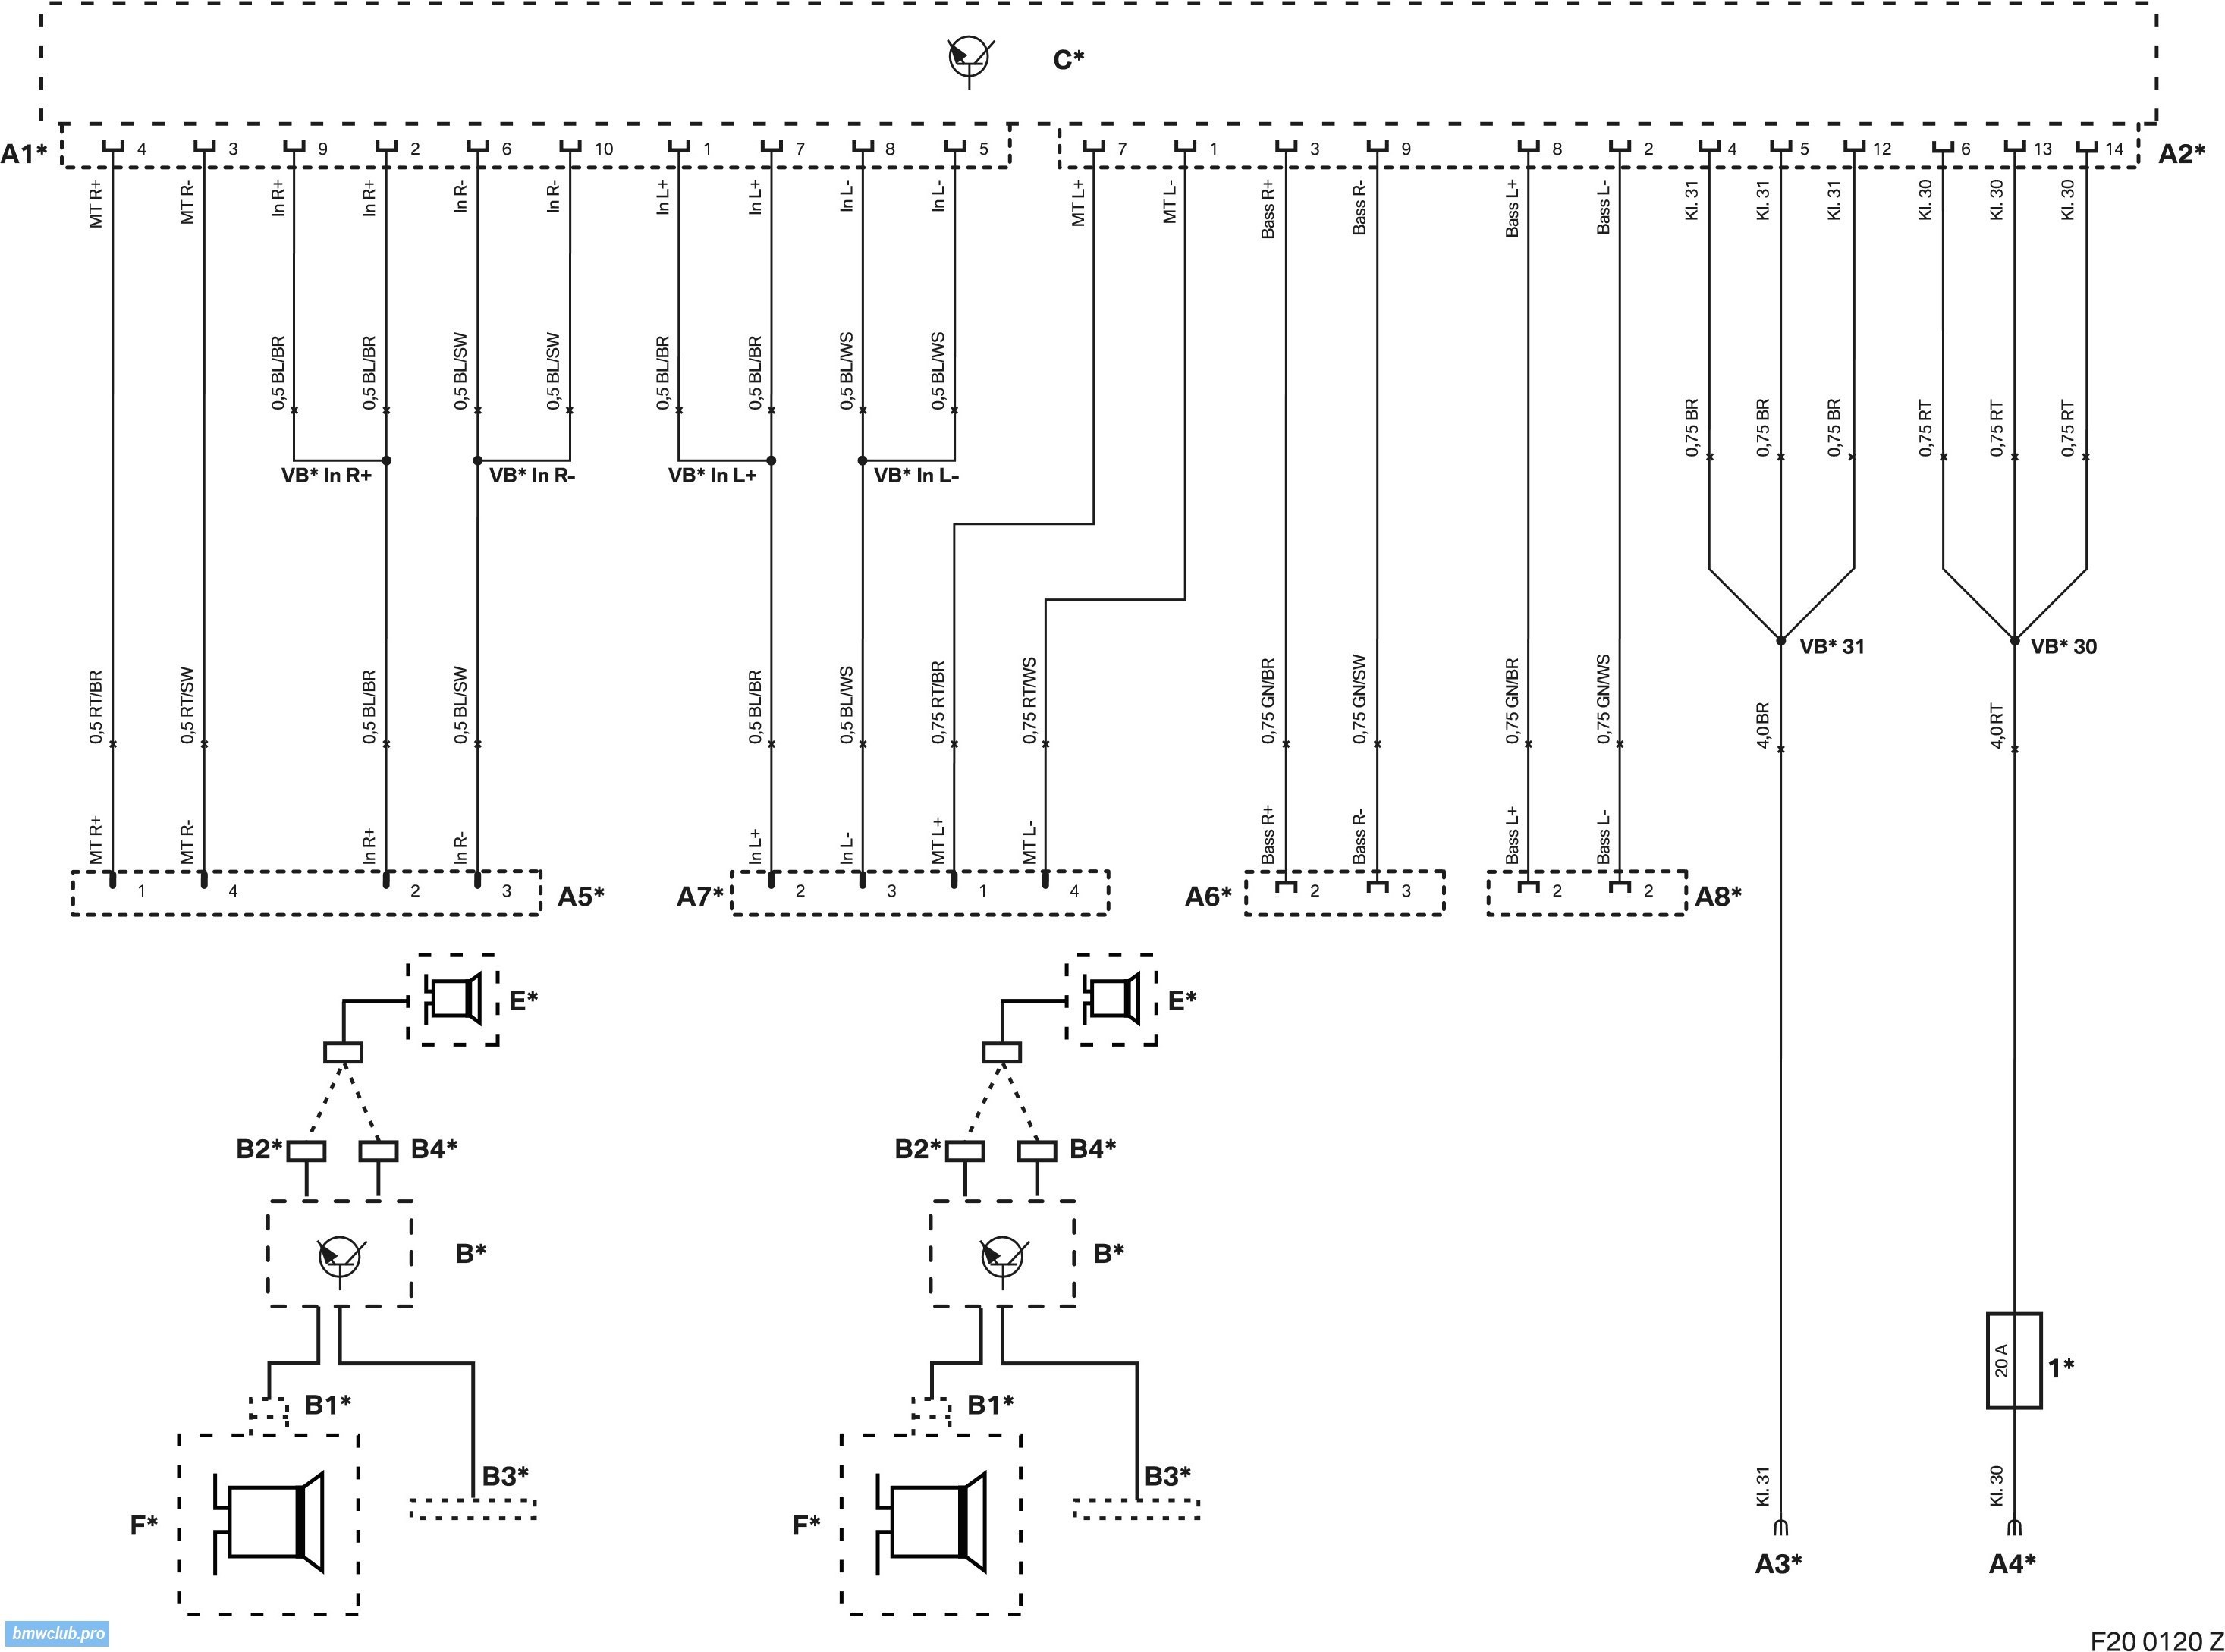 sunvision pro 24s wiring diagram